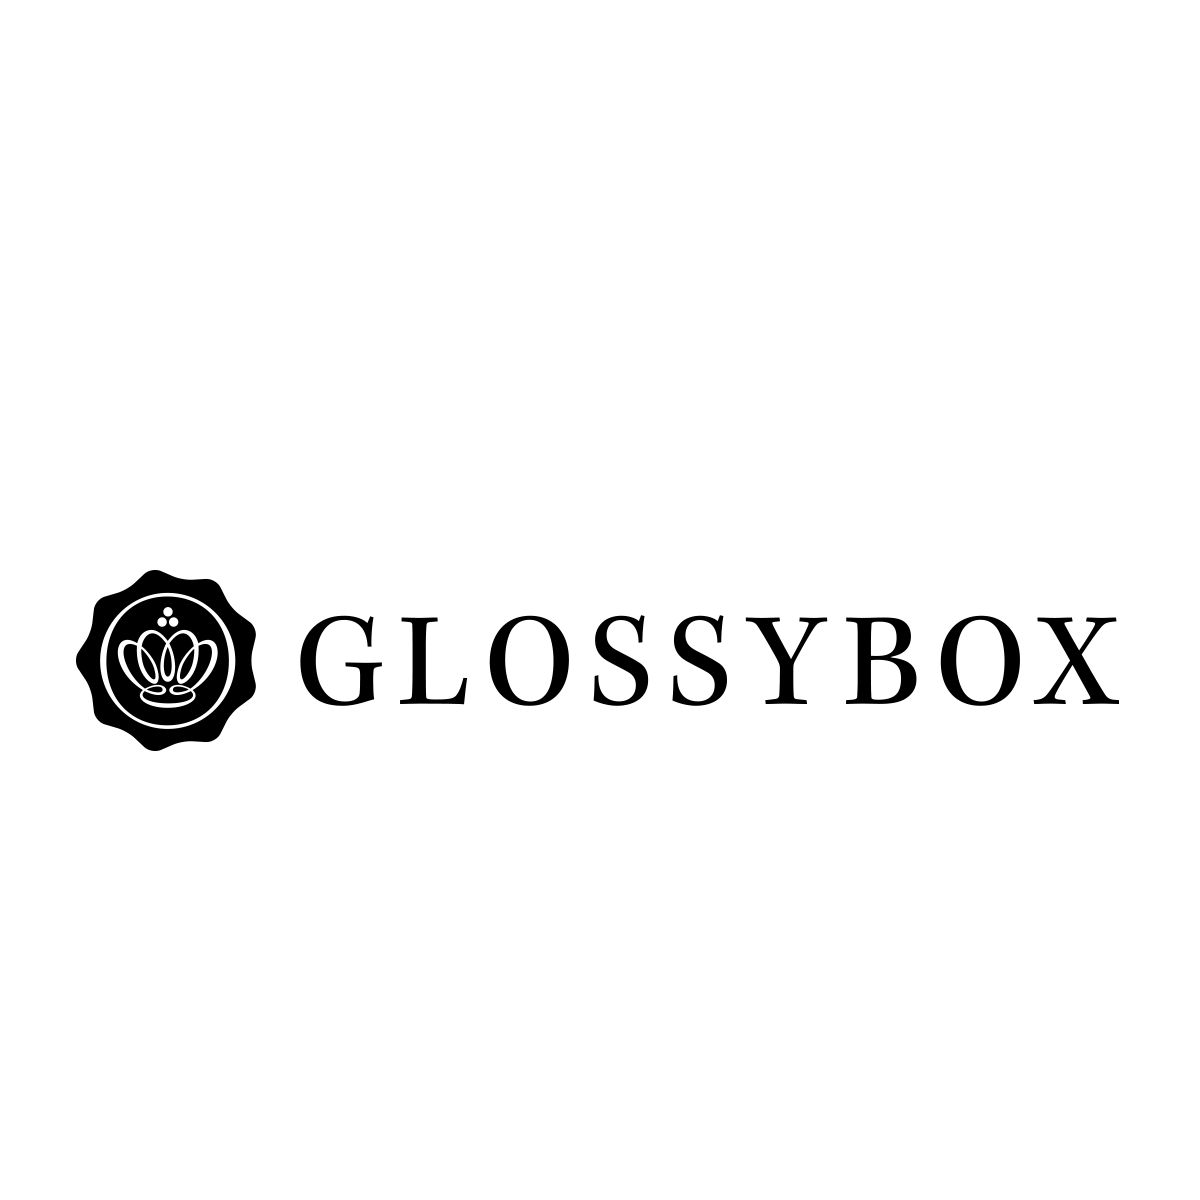 (c) Glossybox.co.uk